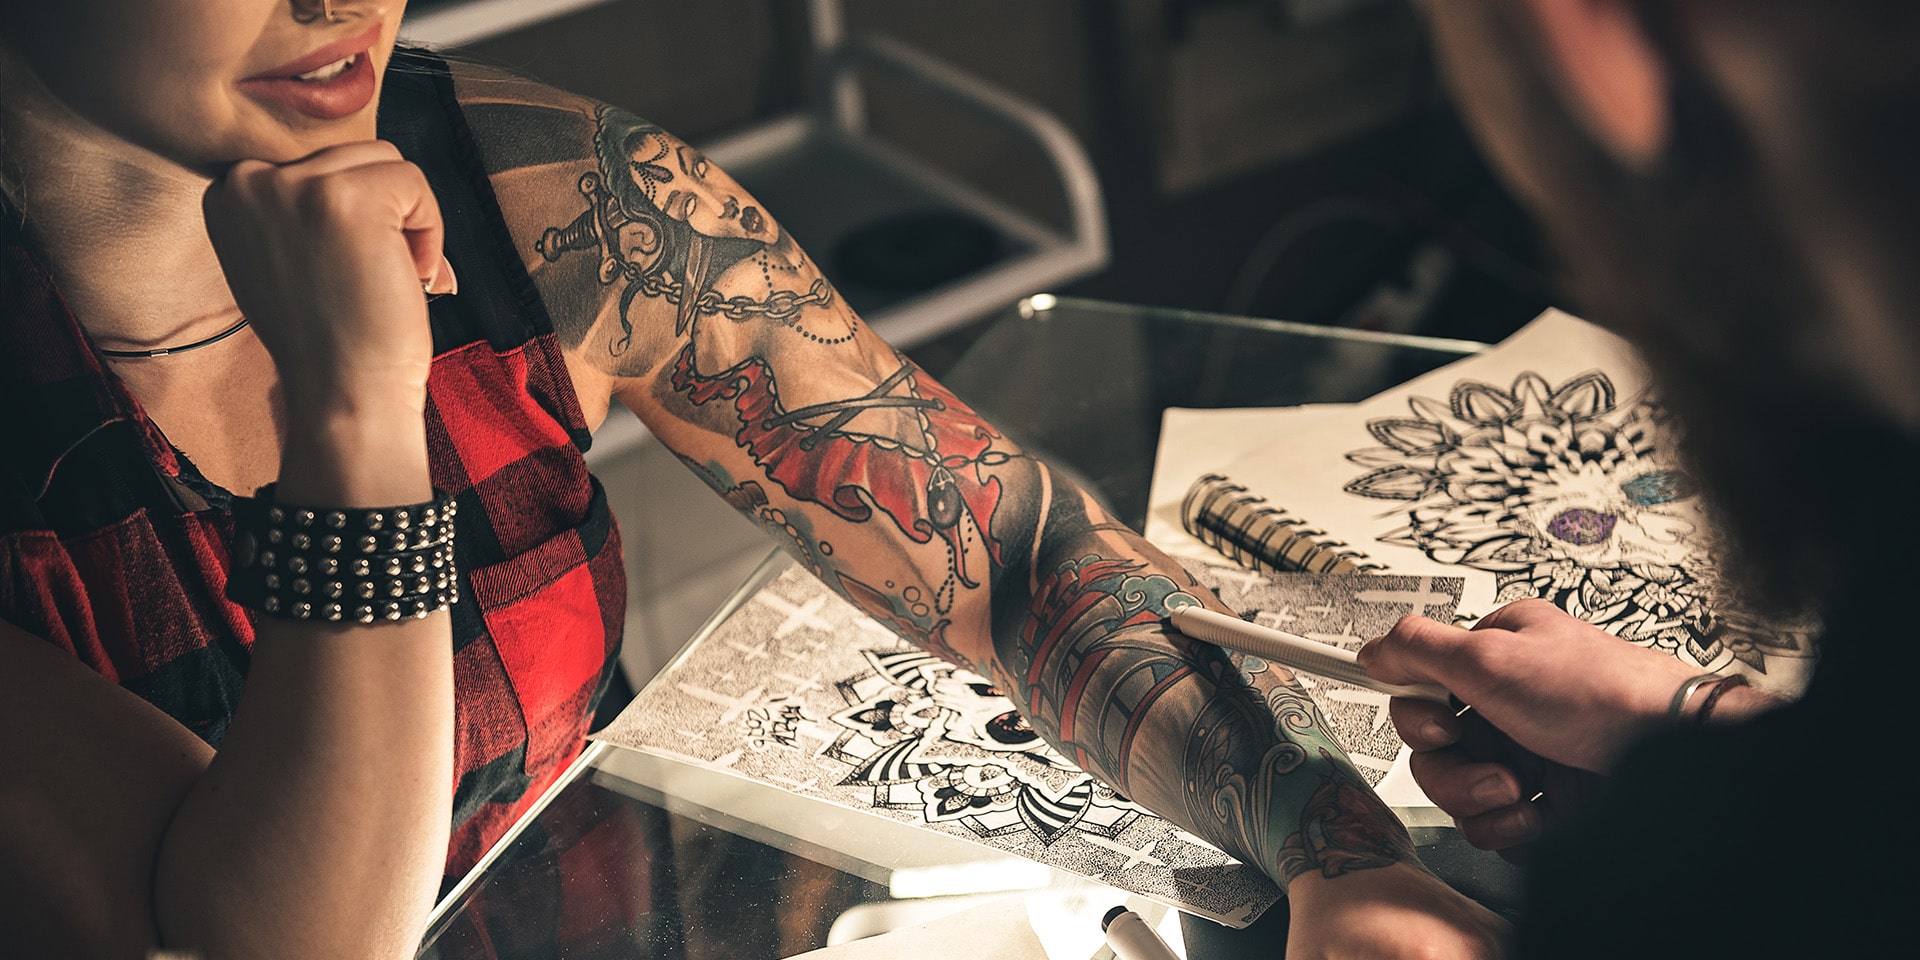 40 Wrist Cover Up Tattoos